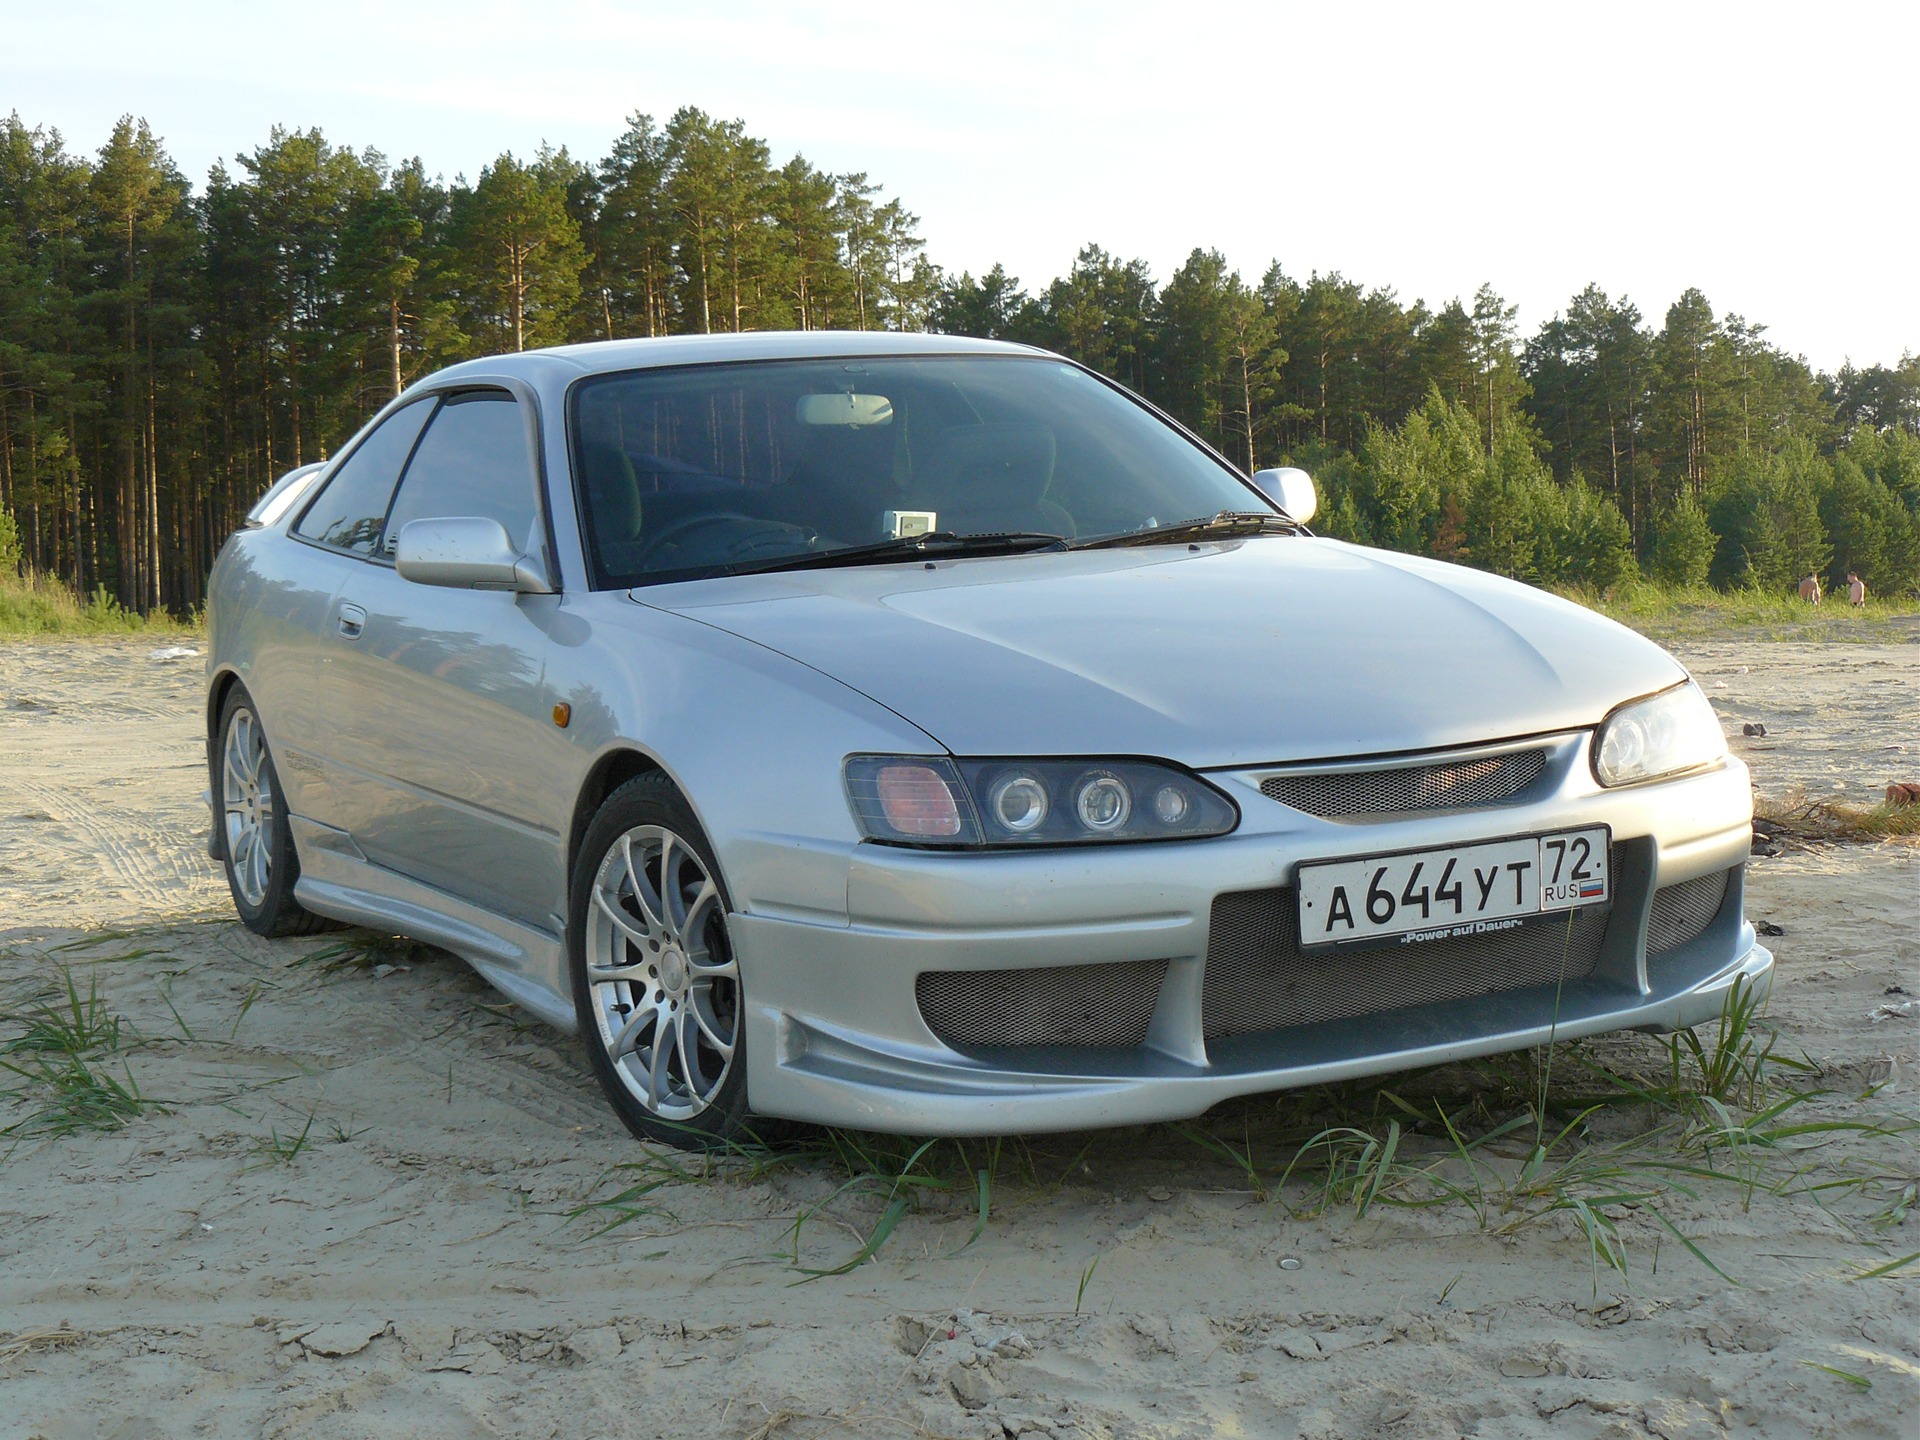      Toyota Corolla Levin 16 1997